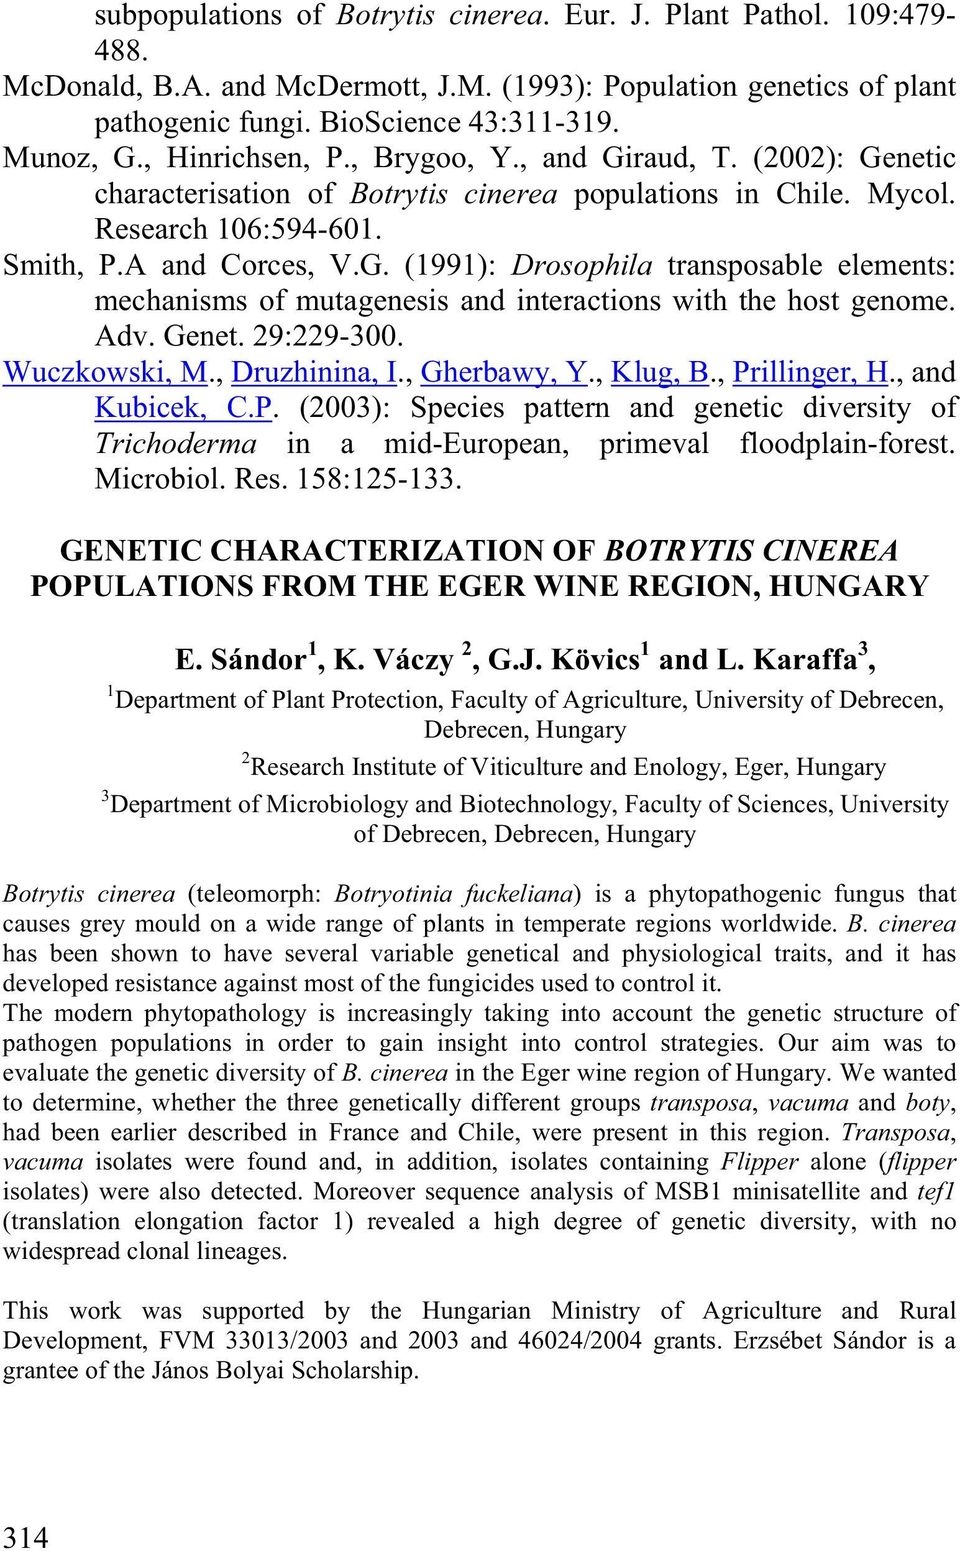 Adv. Genet. 29:229-300. Wuczkowski, M., Druzhinina, I., Gherbawy, Y., Klug, B., Prillinger, H., and Kubicek, C.P. (2003): Species pattern and genetic diversity of Trichoderma in a mid-european, primeval floodplain-forest.